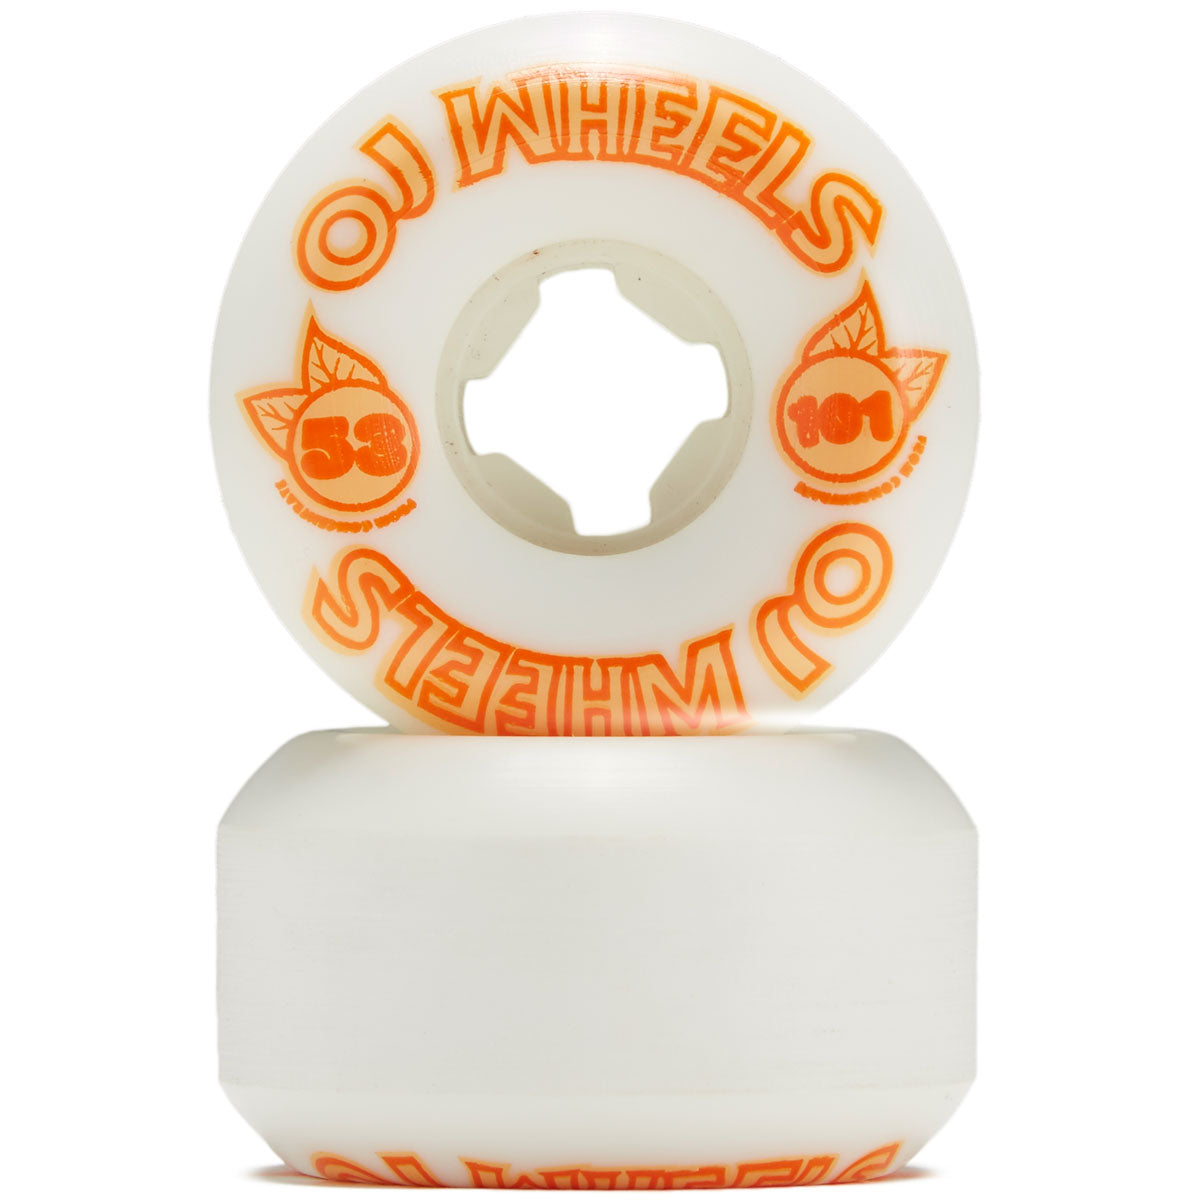 OJ From Concentrate Hardline 101a Skateboard Wheels - White/Orange - 53mm image 2